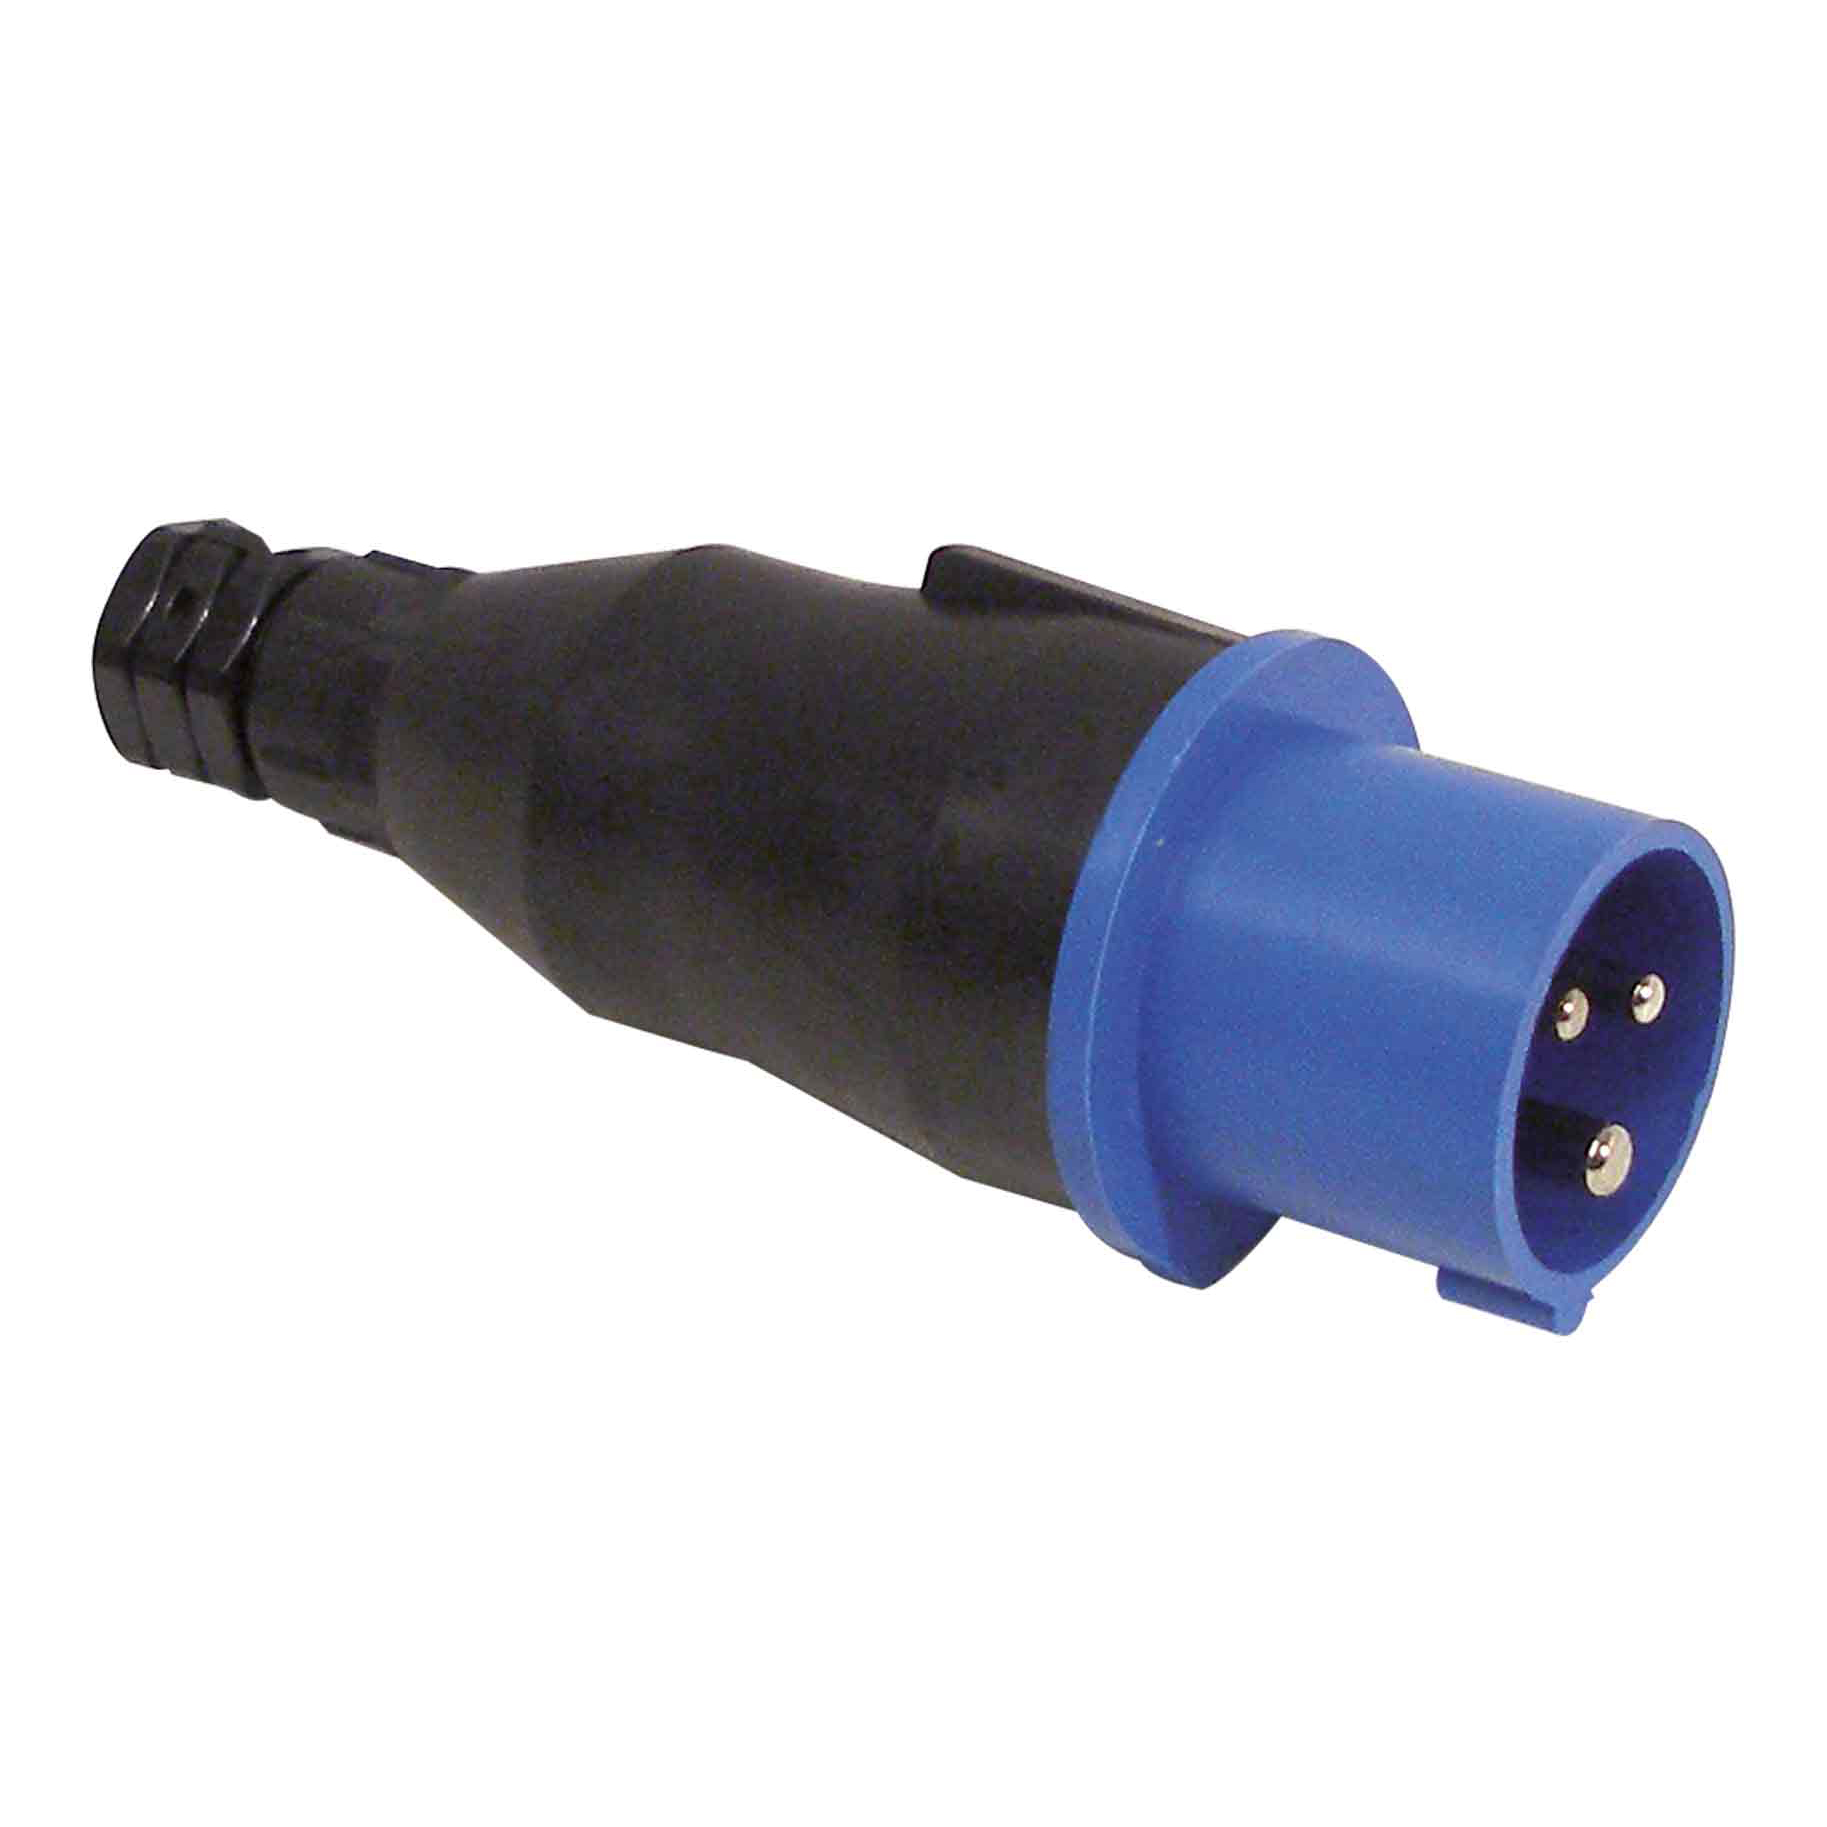 GIFAS Solid Rubber CEE Plug 16A 230V 3-pole (122183)